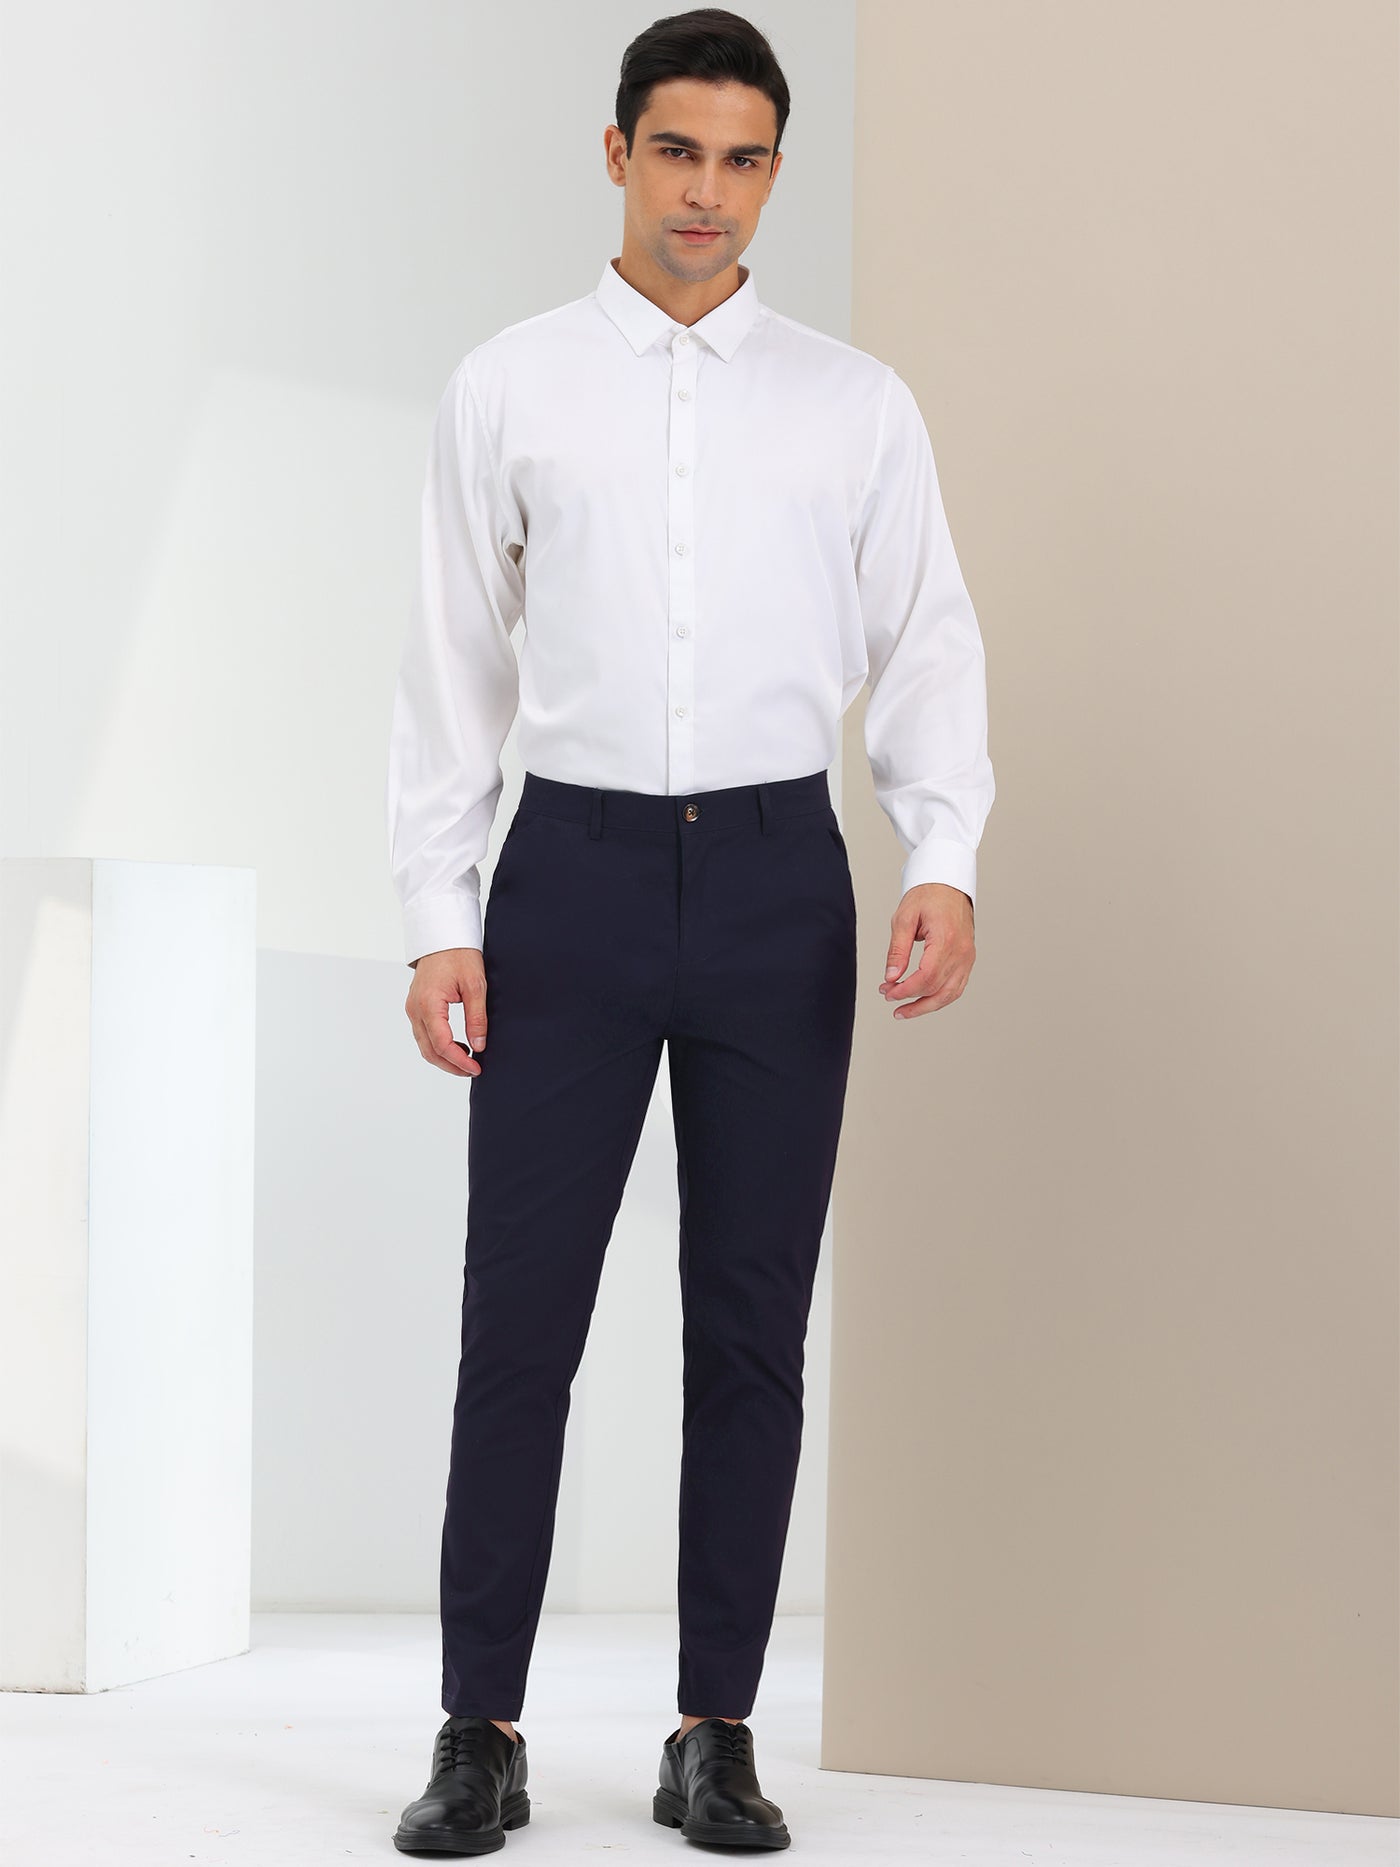 Bublédon Slim Fit Solid Color Chino Pencil Dress Trousers Pants